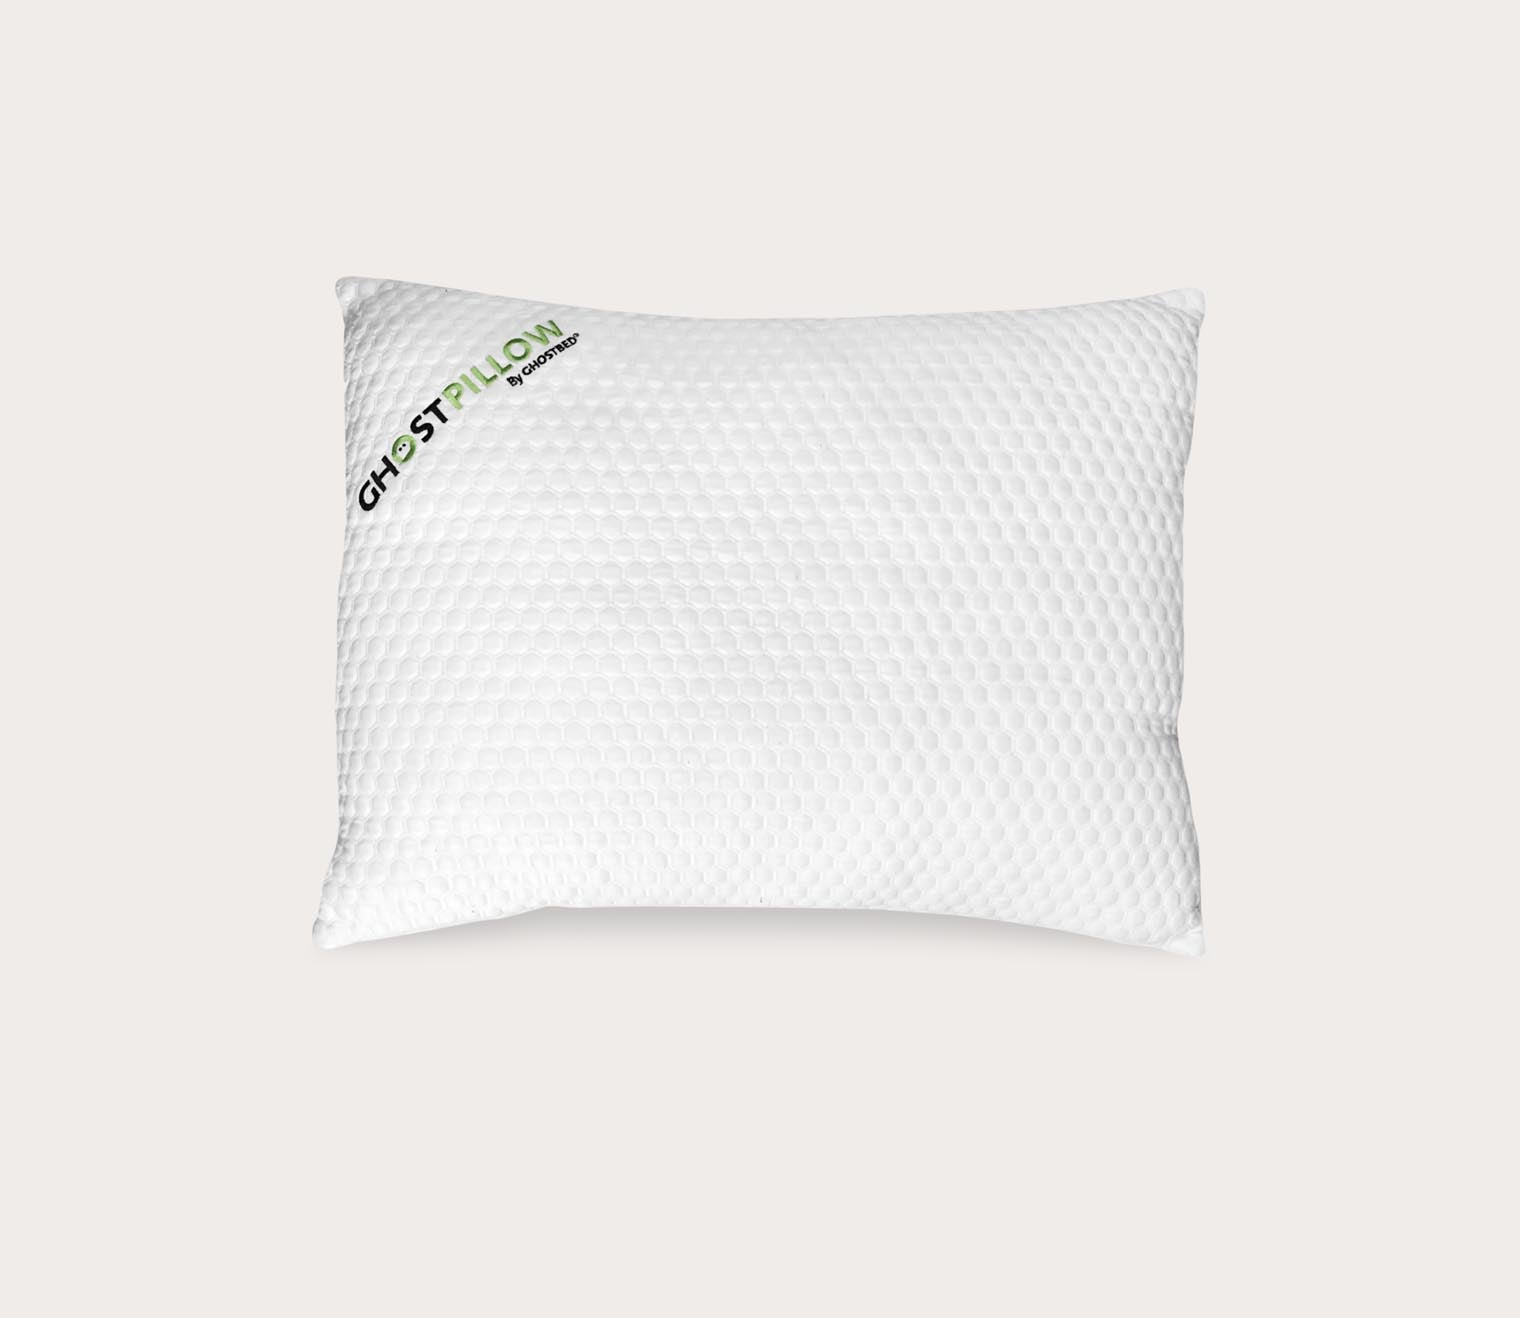 Shredded Memory Foam Pillow 2-Pack by GhostBed